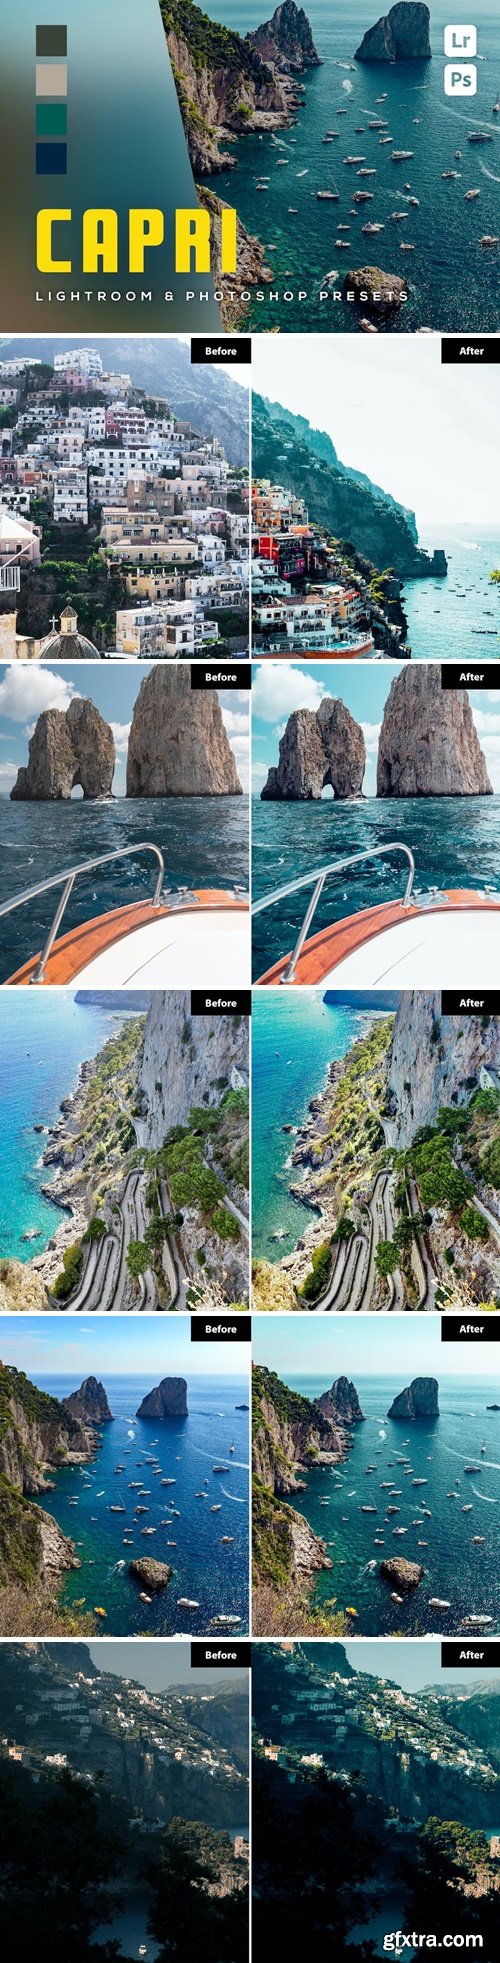 6 Capri Lightroom and Photoshop Presets 9752KJ3